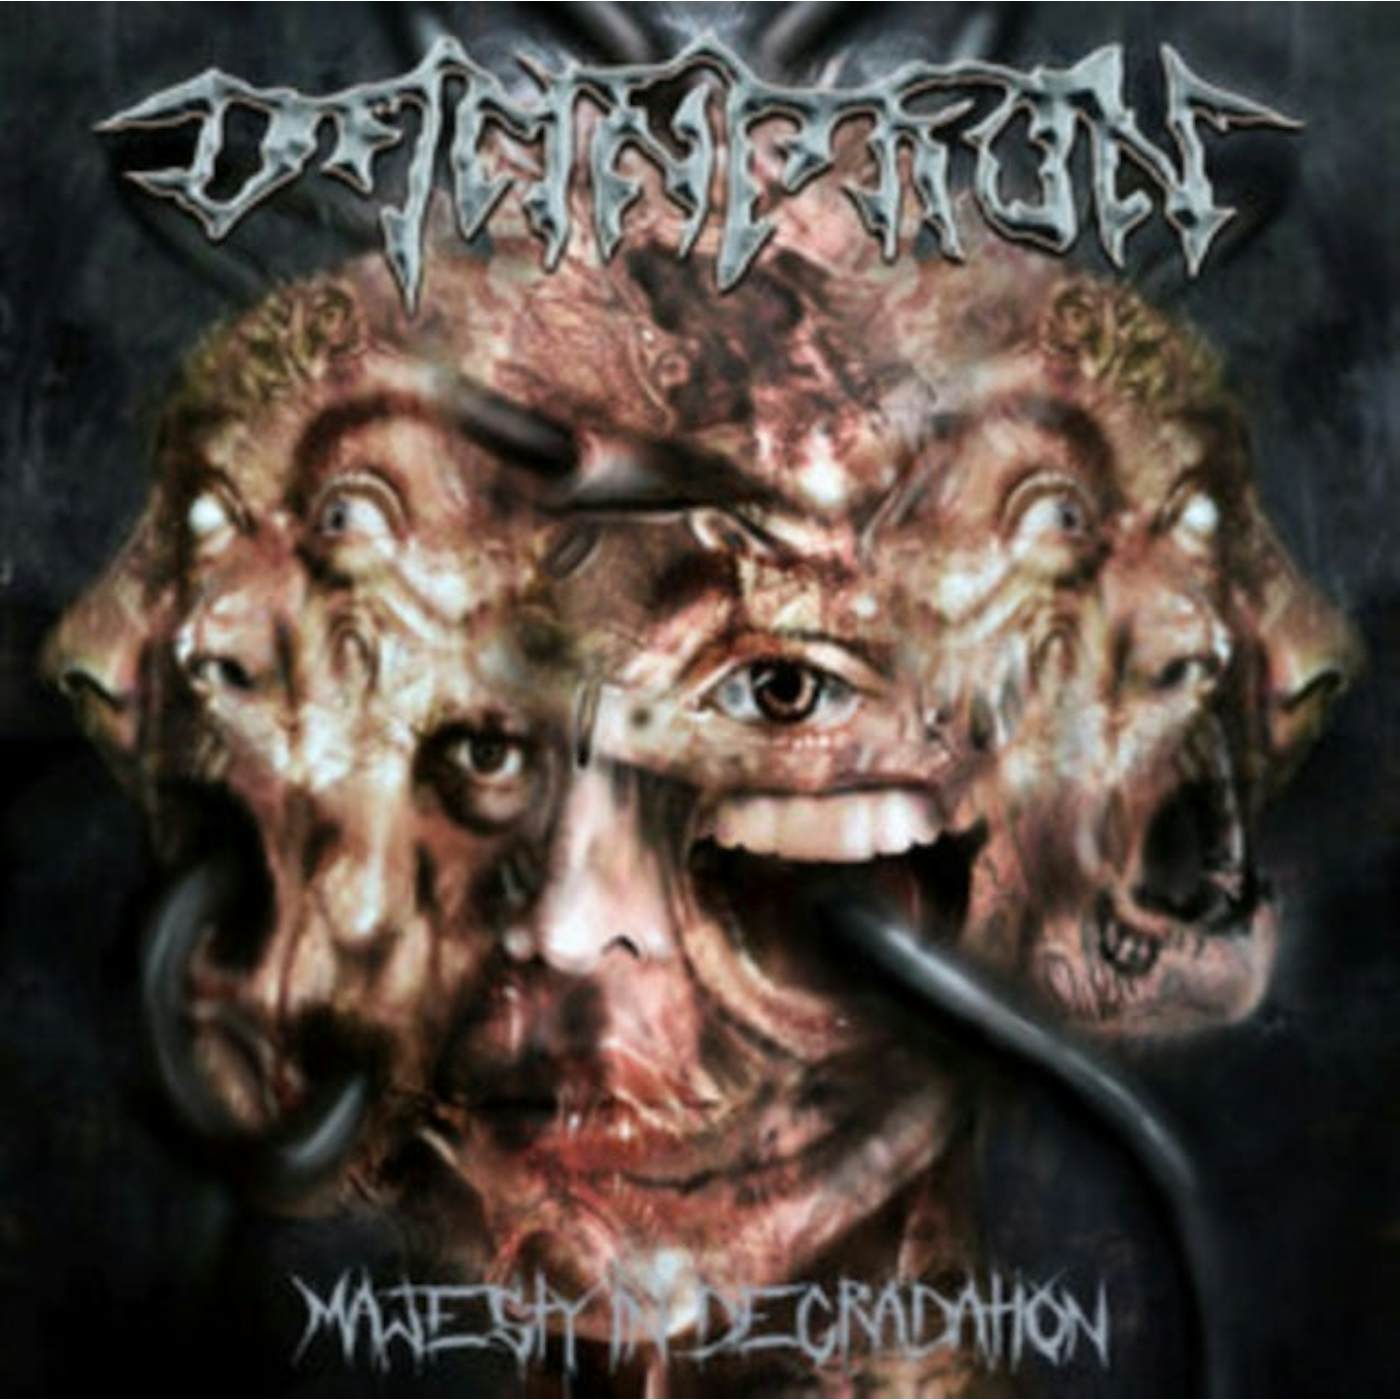 Damnation CD - Majesty In Degradation